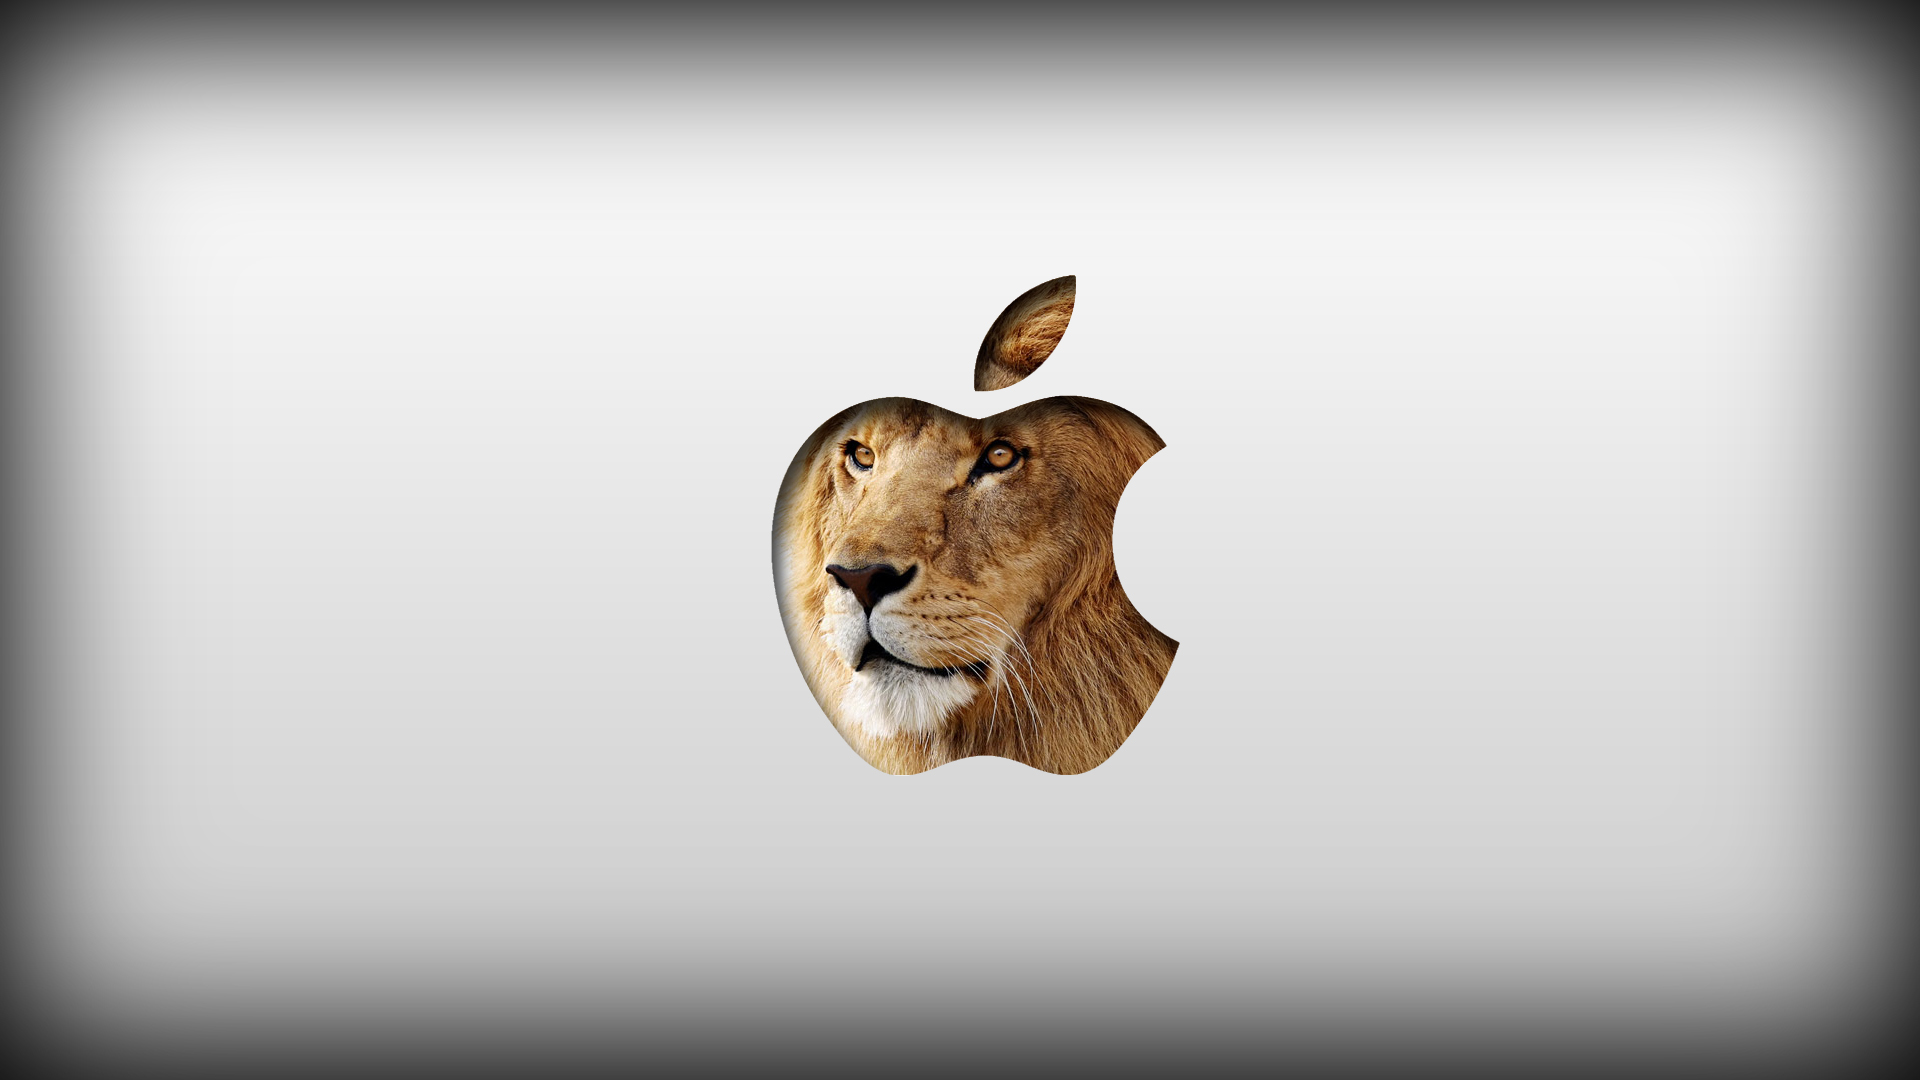 Top 10 Mac OS X Lion Desktop Wallpapers